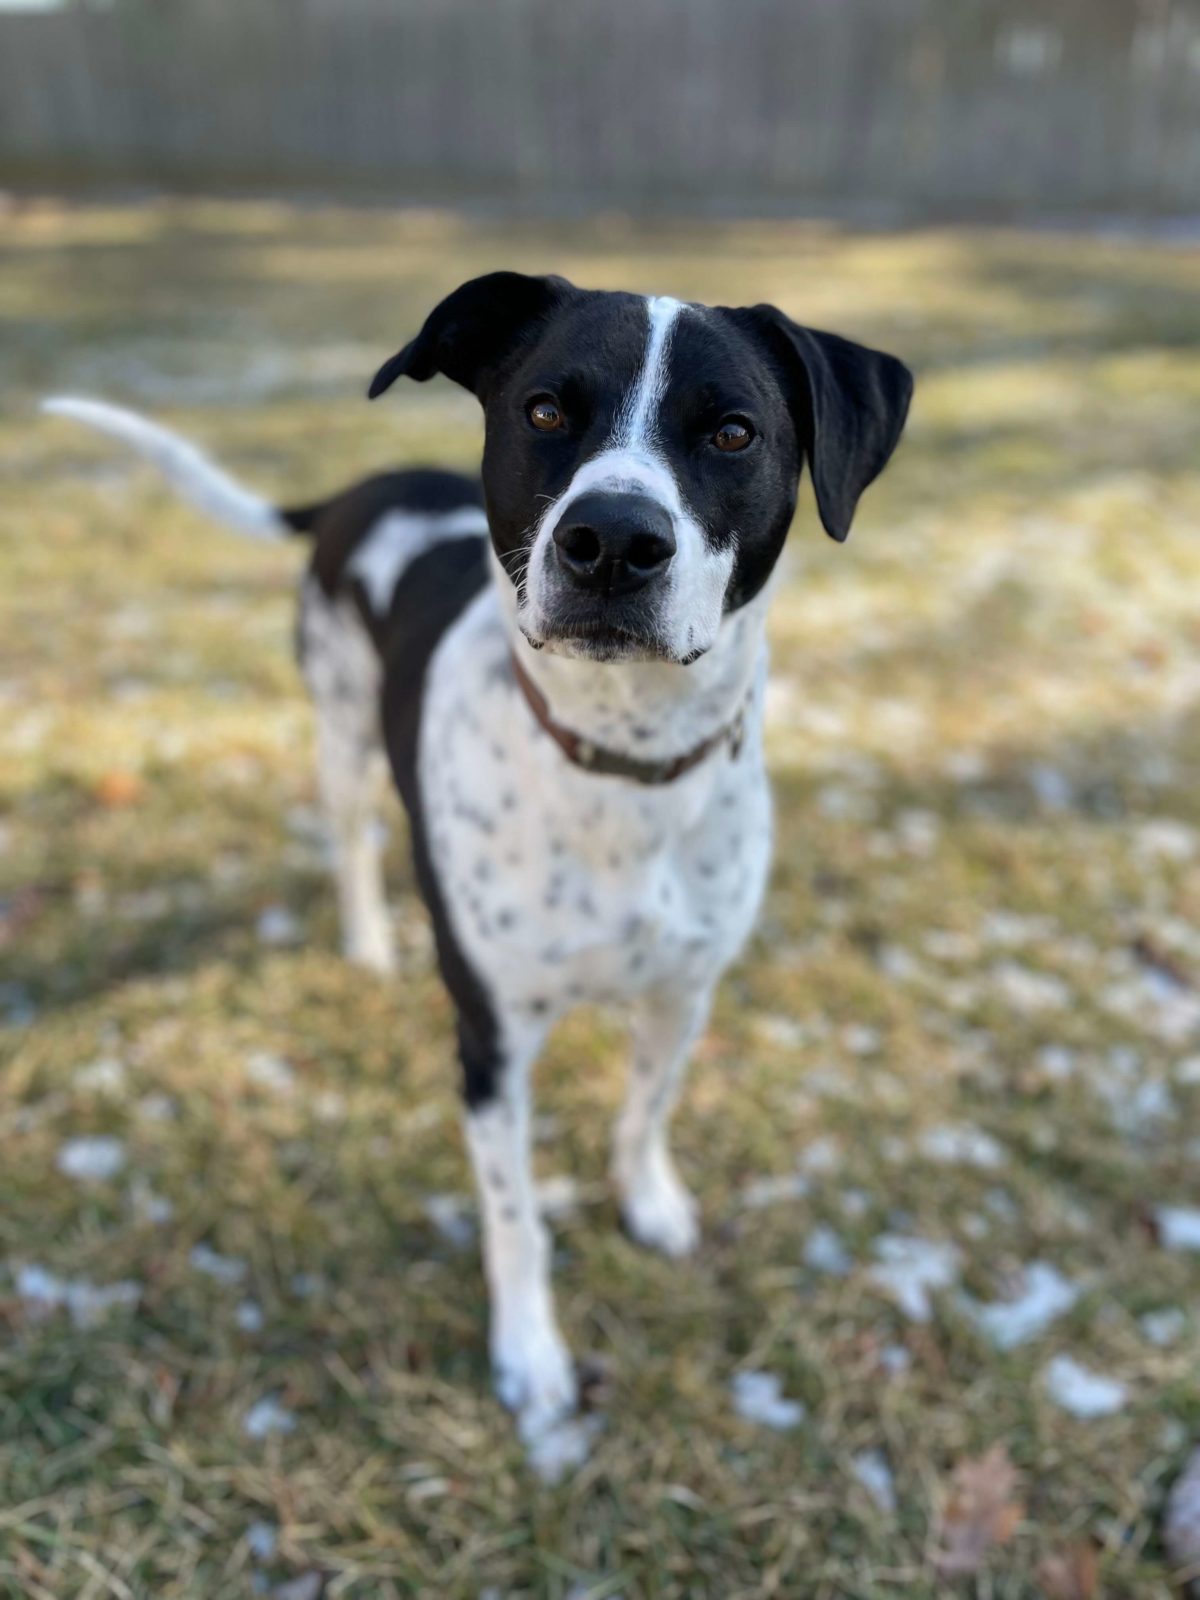 A black and white dog named Pepper